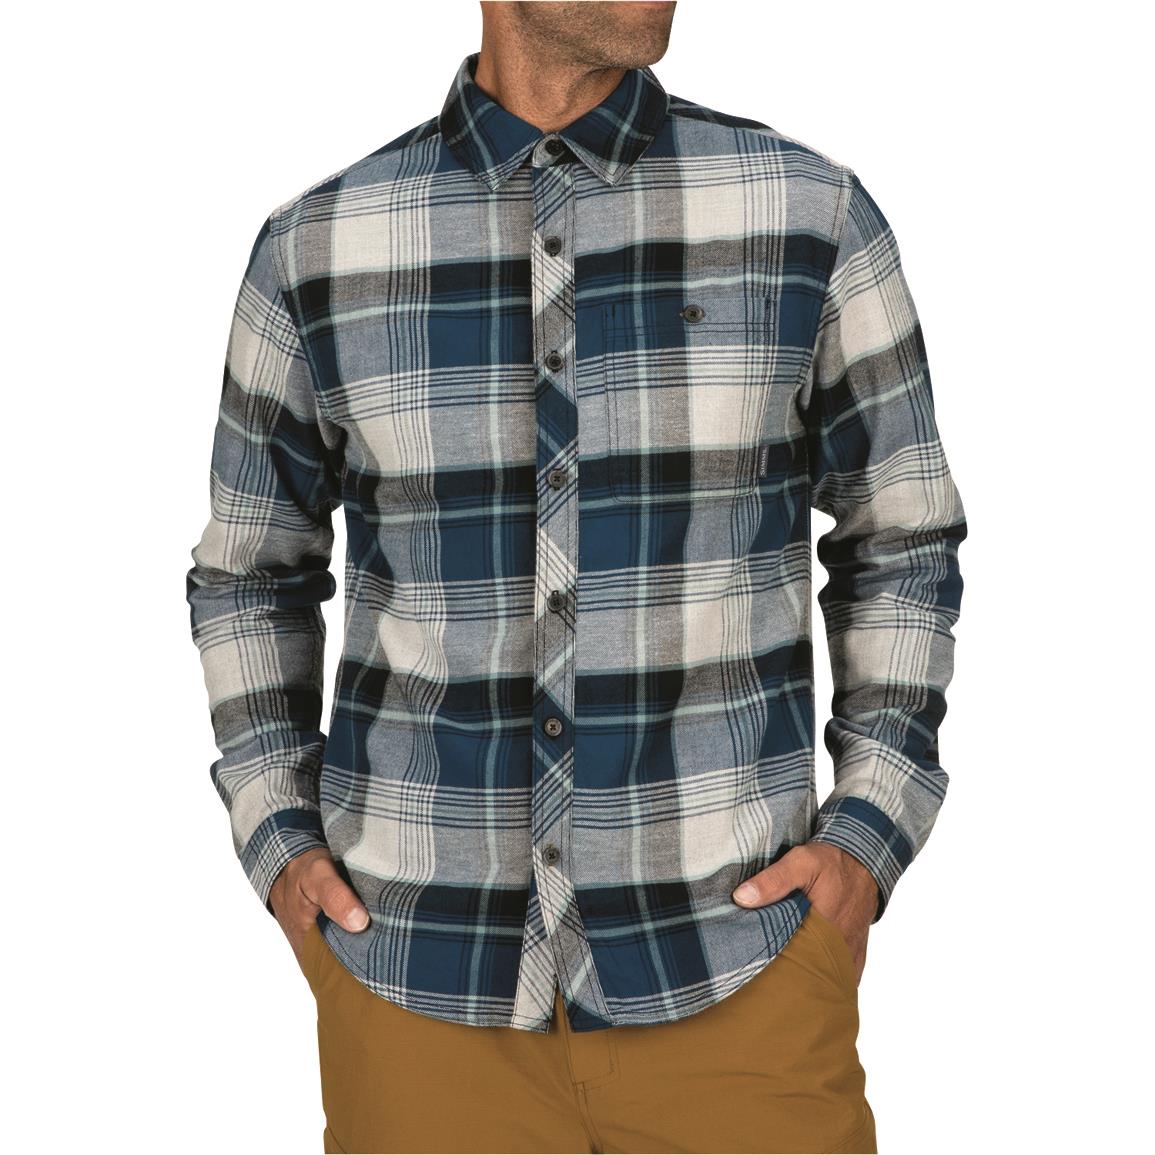 Simms Men's Dockwear Cotton Flannel Shirt, Atlantis Celadon Plaid